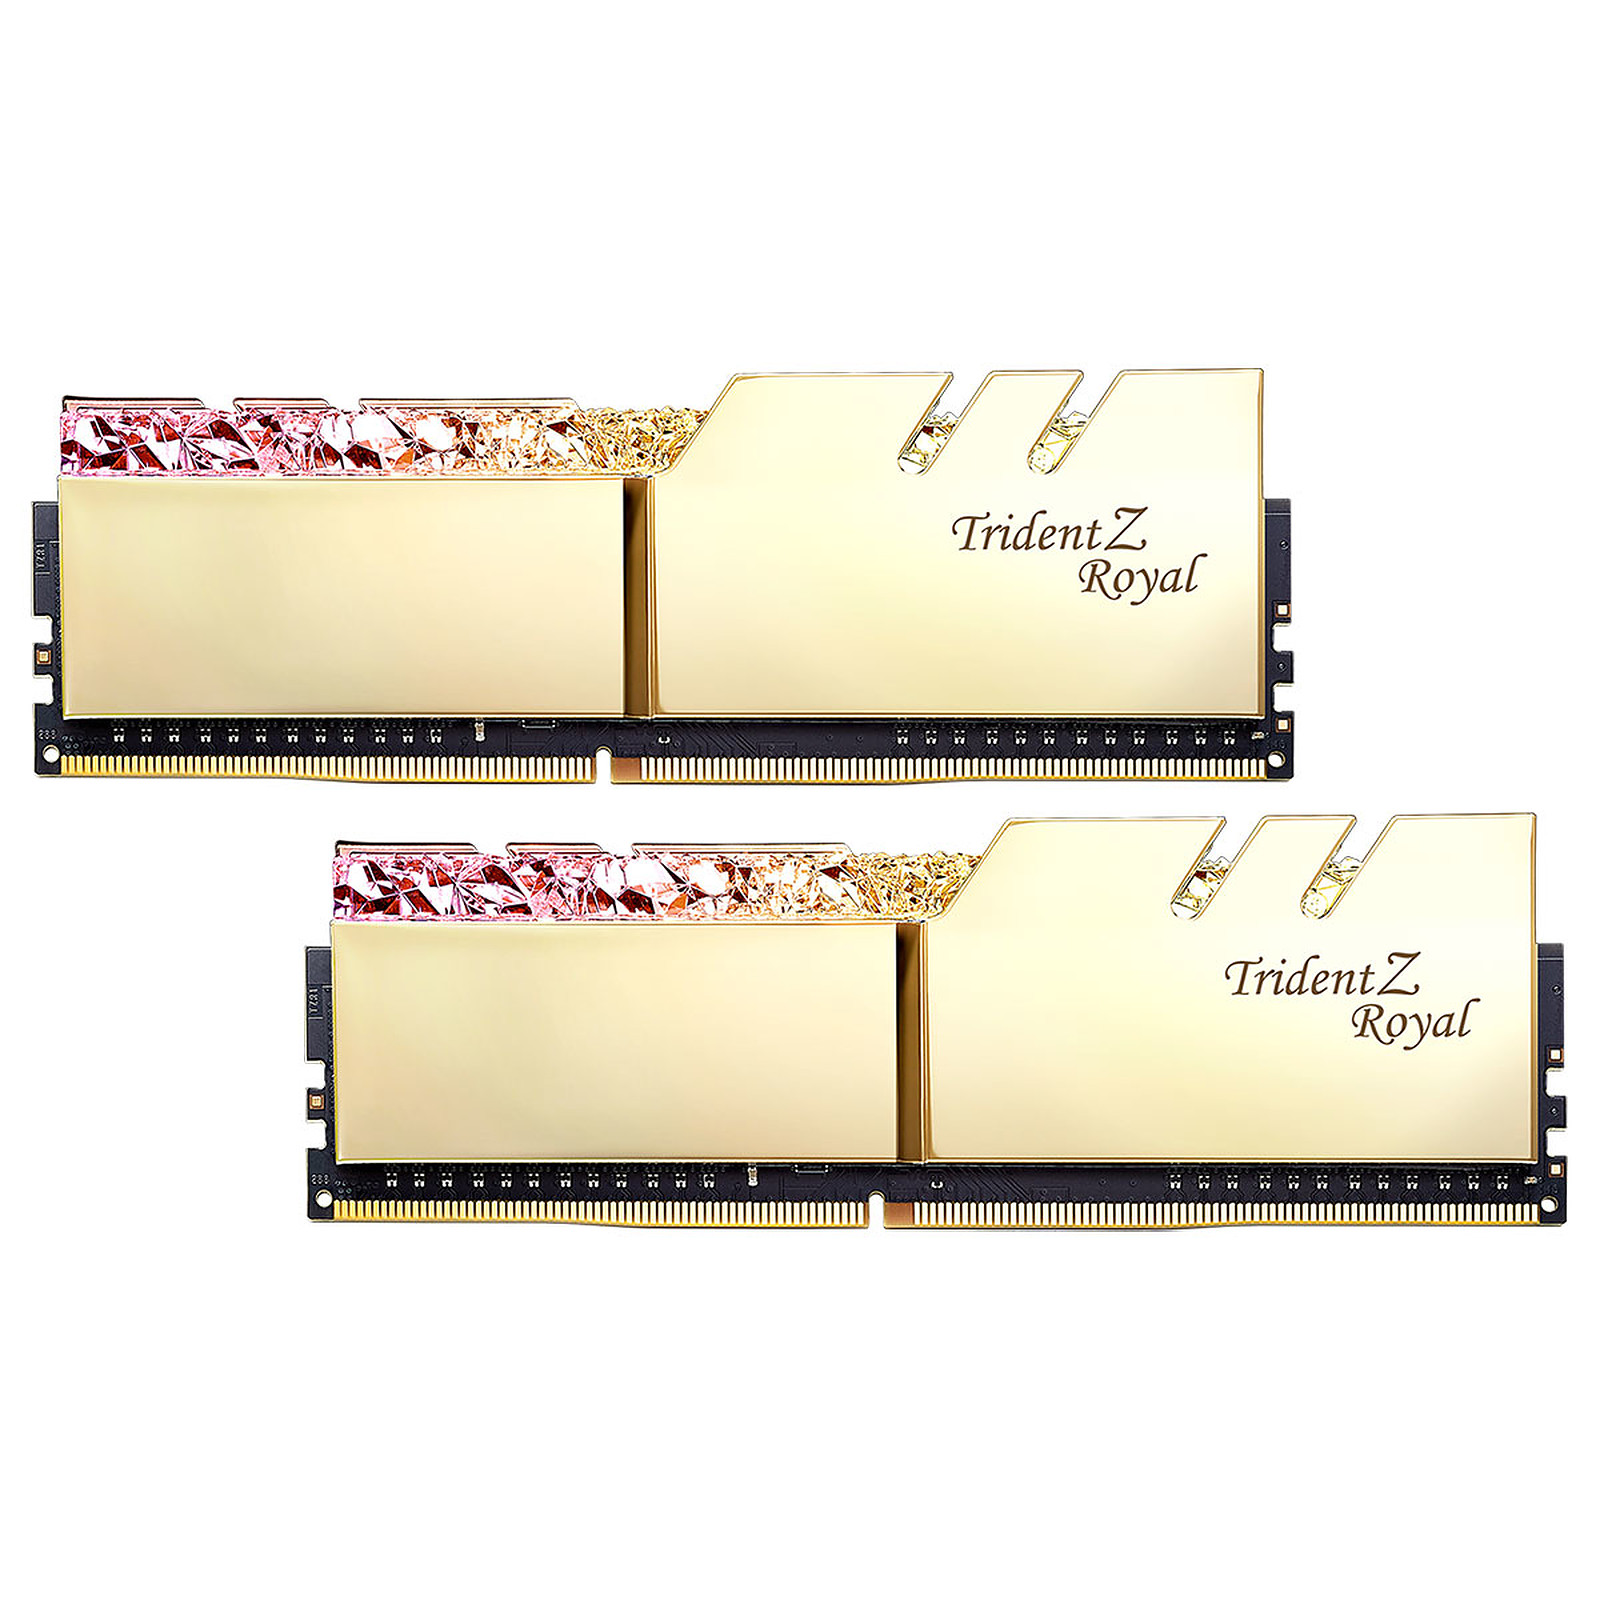 G.Skill Trident Z Royal 16 Go (2x 8 Go) DDR4 3000 MHz CL16 - Or - Memoire PC G.Skill